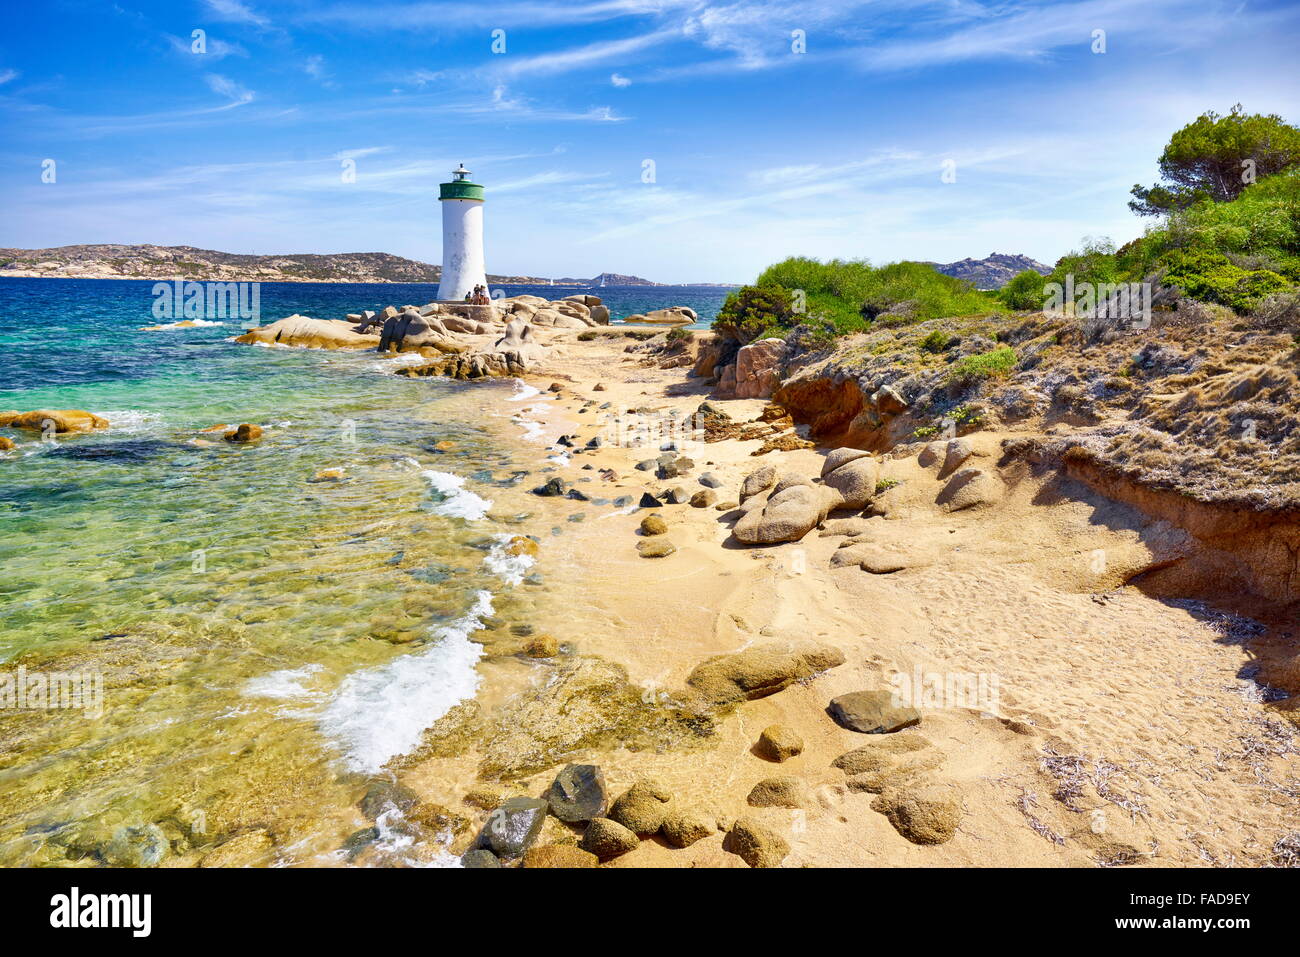 Sardinia Island - Lighthouse, Palau Beach, Italy Stock Photo